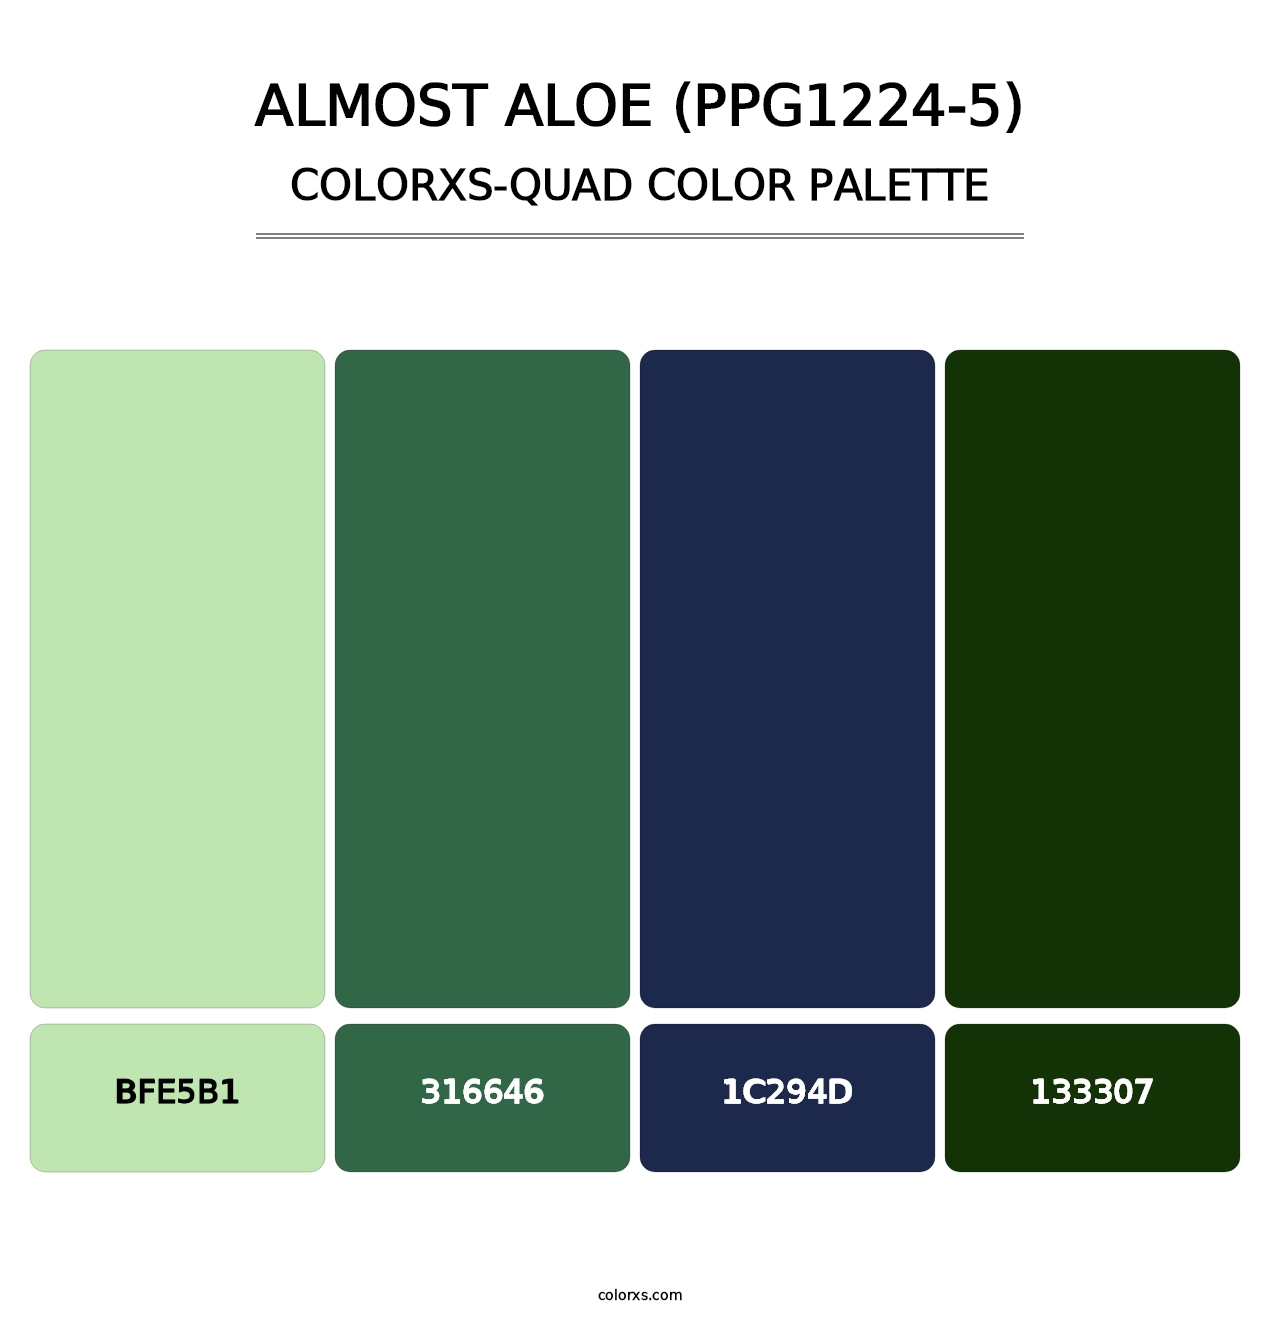 Almost Aloe (PPG1224-5) - Colorxs Quad Palette